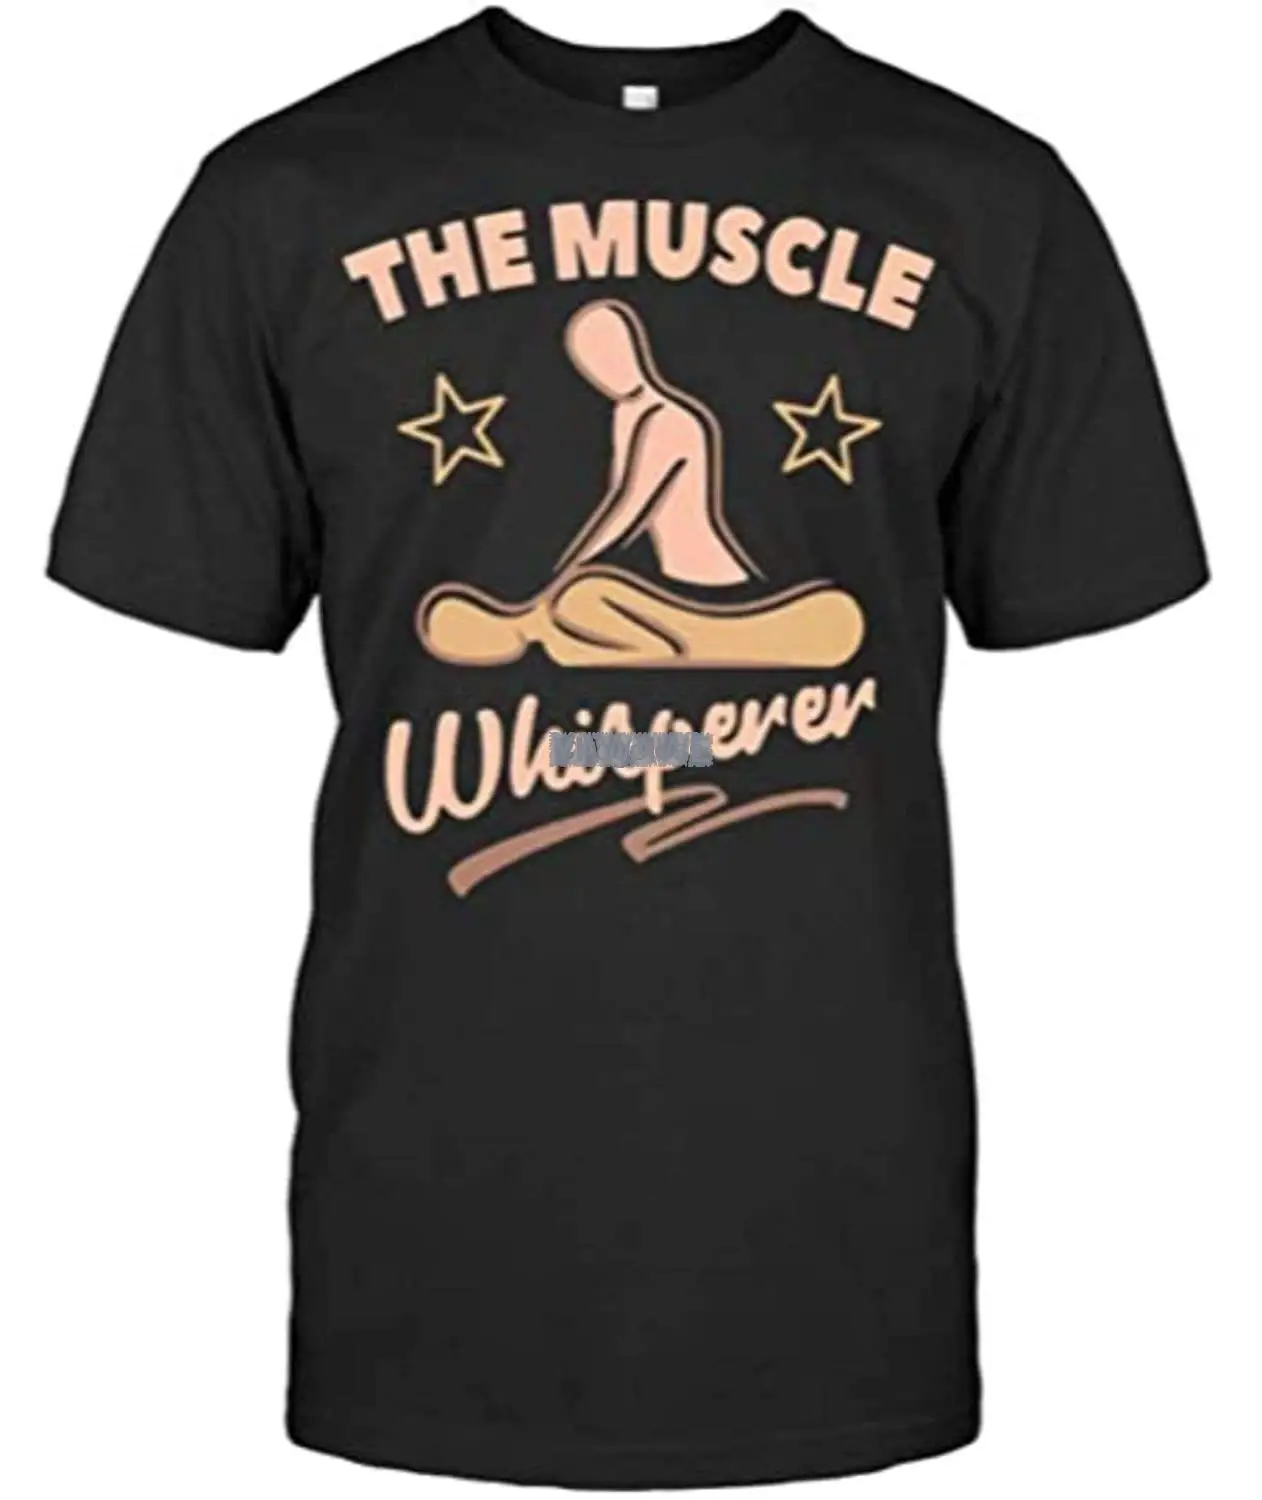 Мужская летняя футболка Massage xoa The Muscle Whisperer, черная хлопковая футболка, мужская футболка, брендовые модные топы